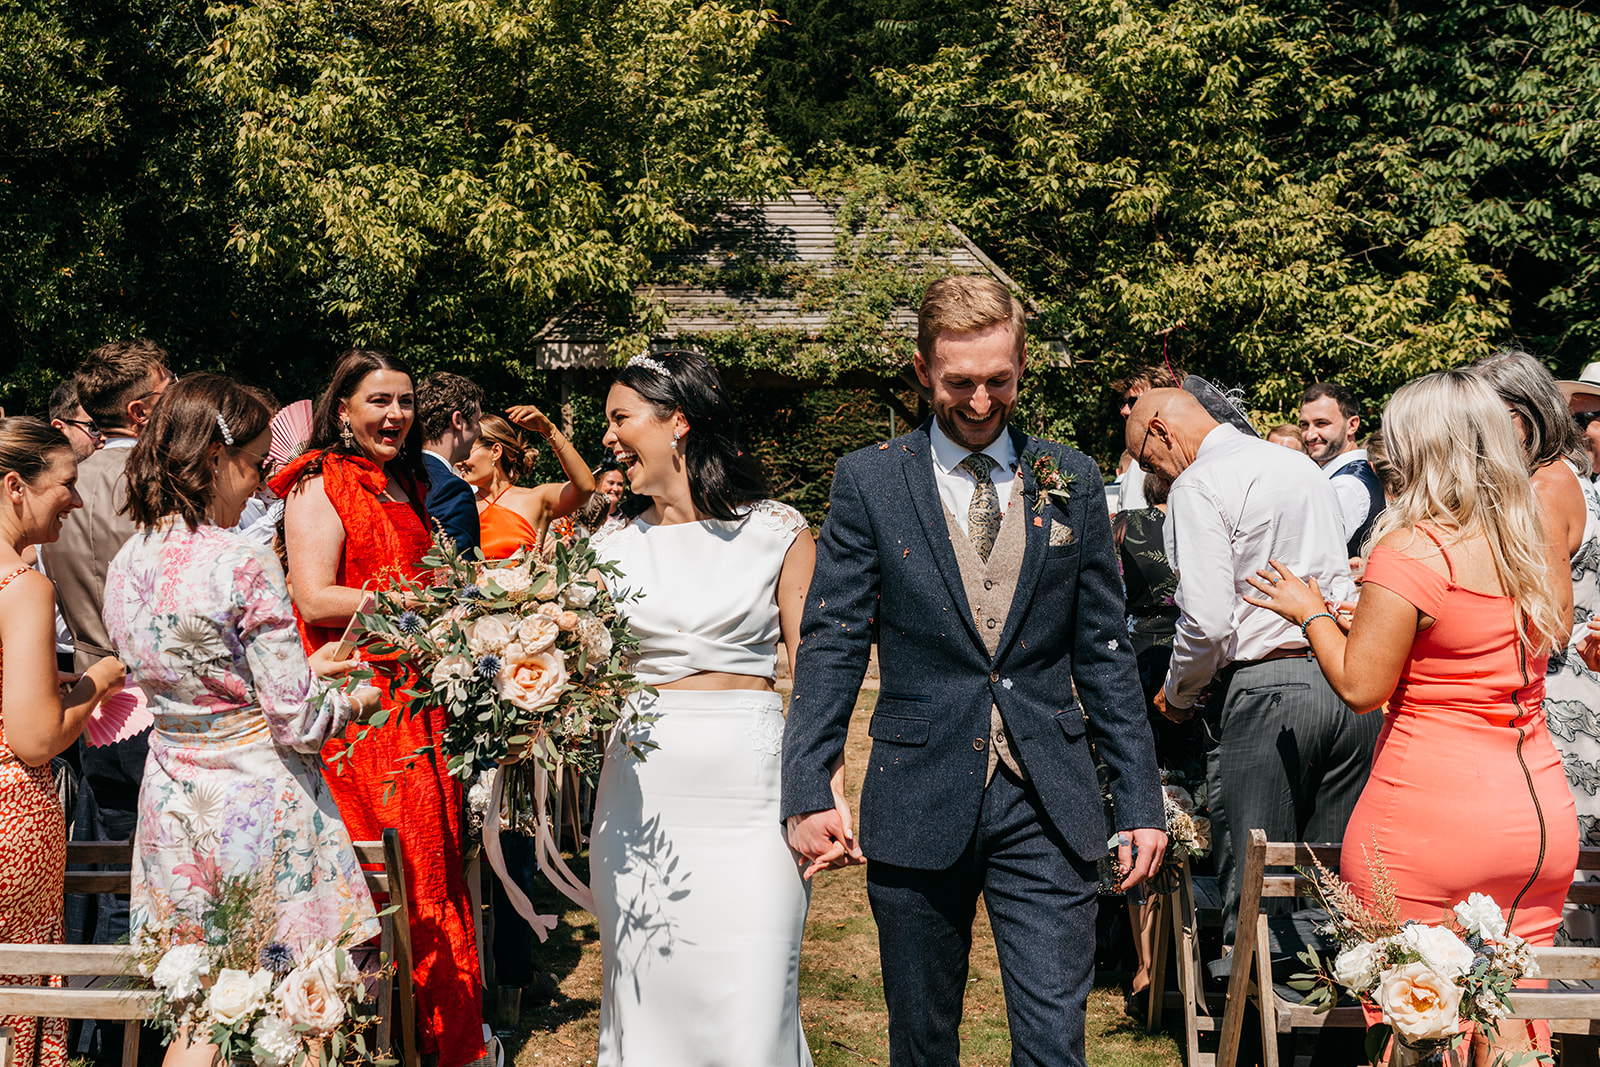 Bride and groom exiting with confetti petals